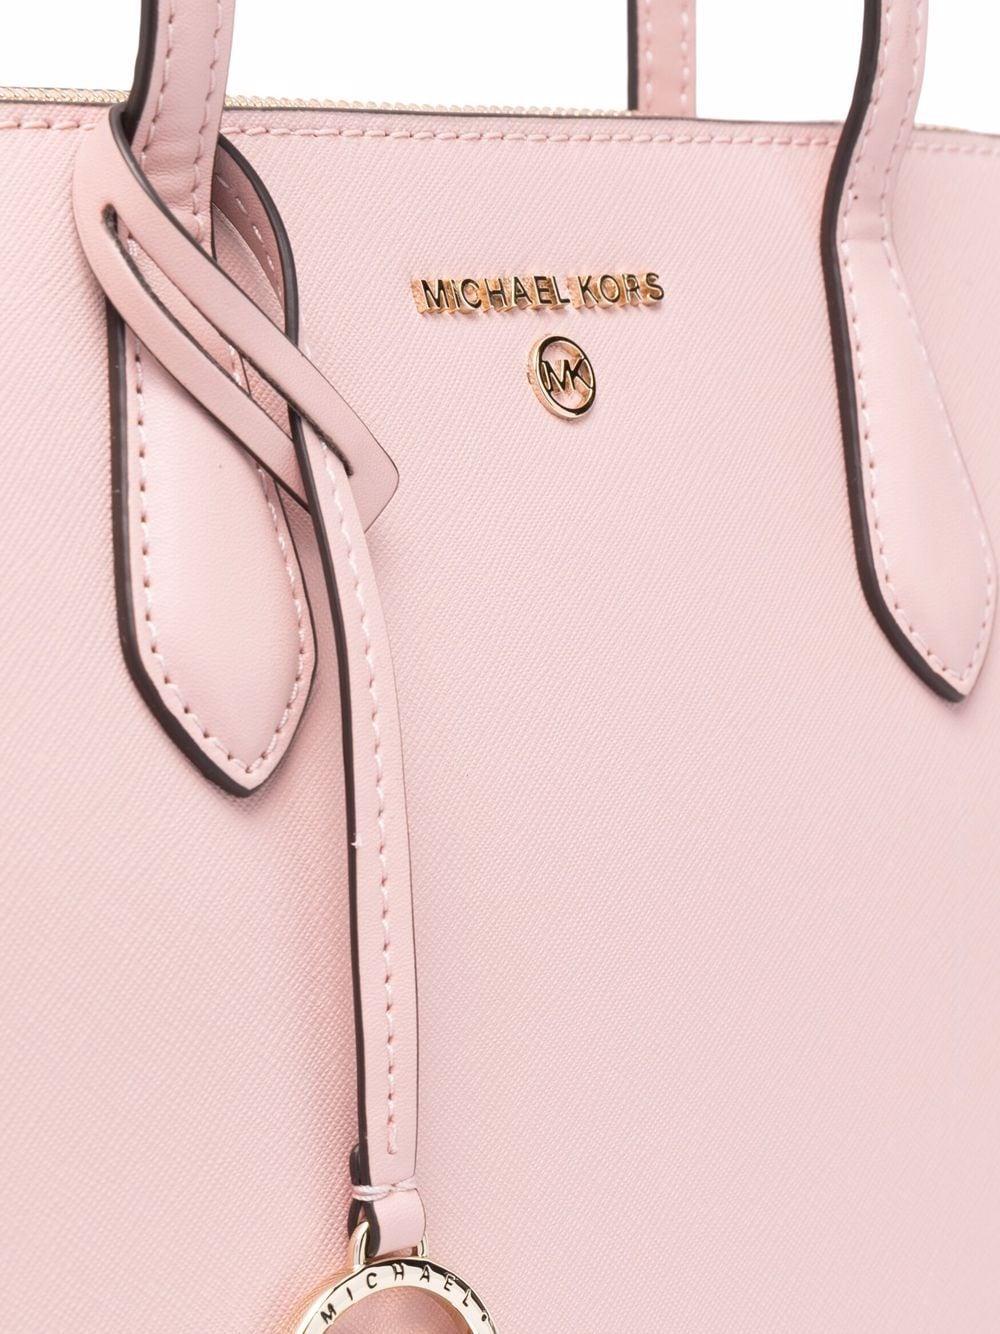 Michael Kors Marilyn Medium Top Zip Pink Saffiano Leather Tote